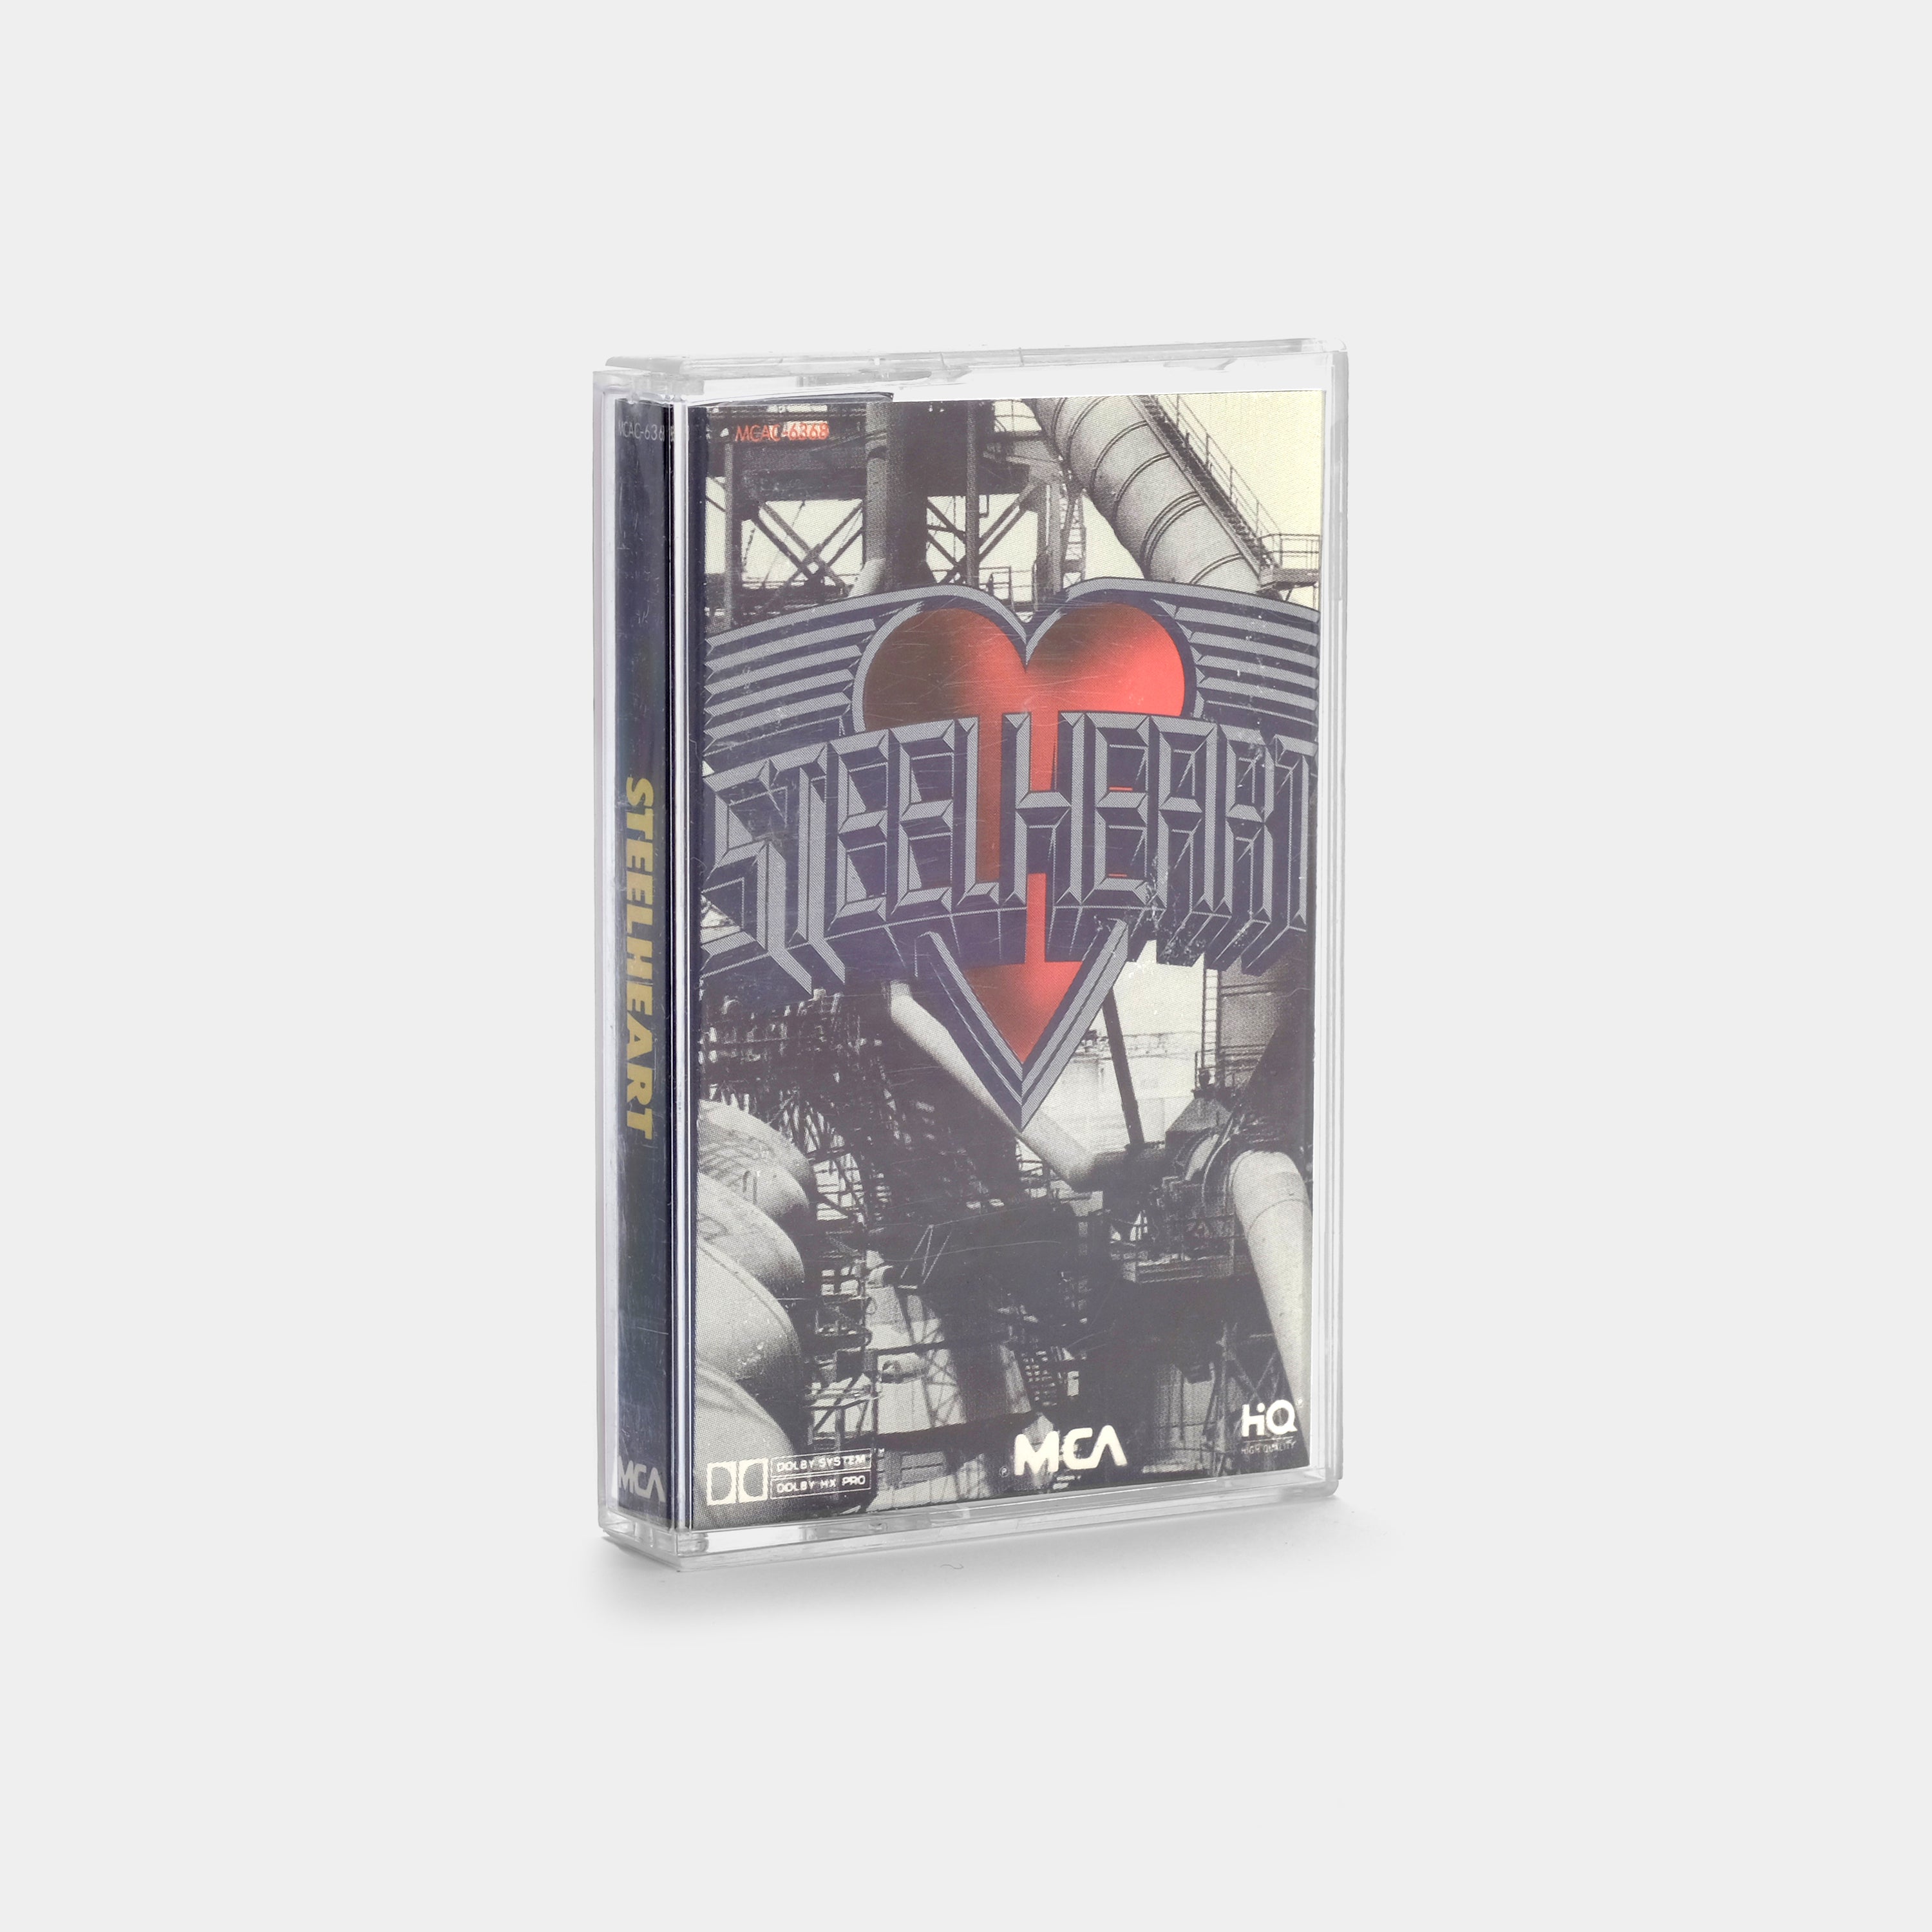 Steelheart - Steelheart Cassette Tape